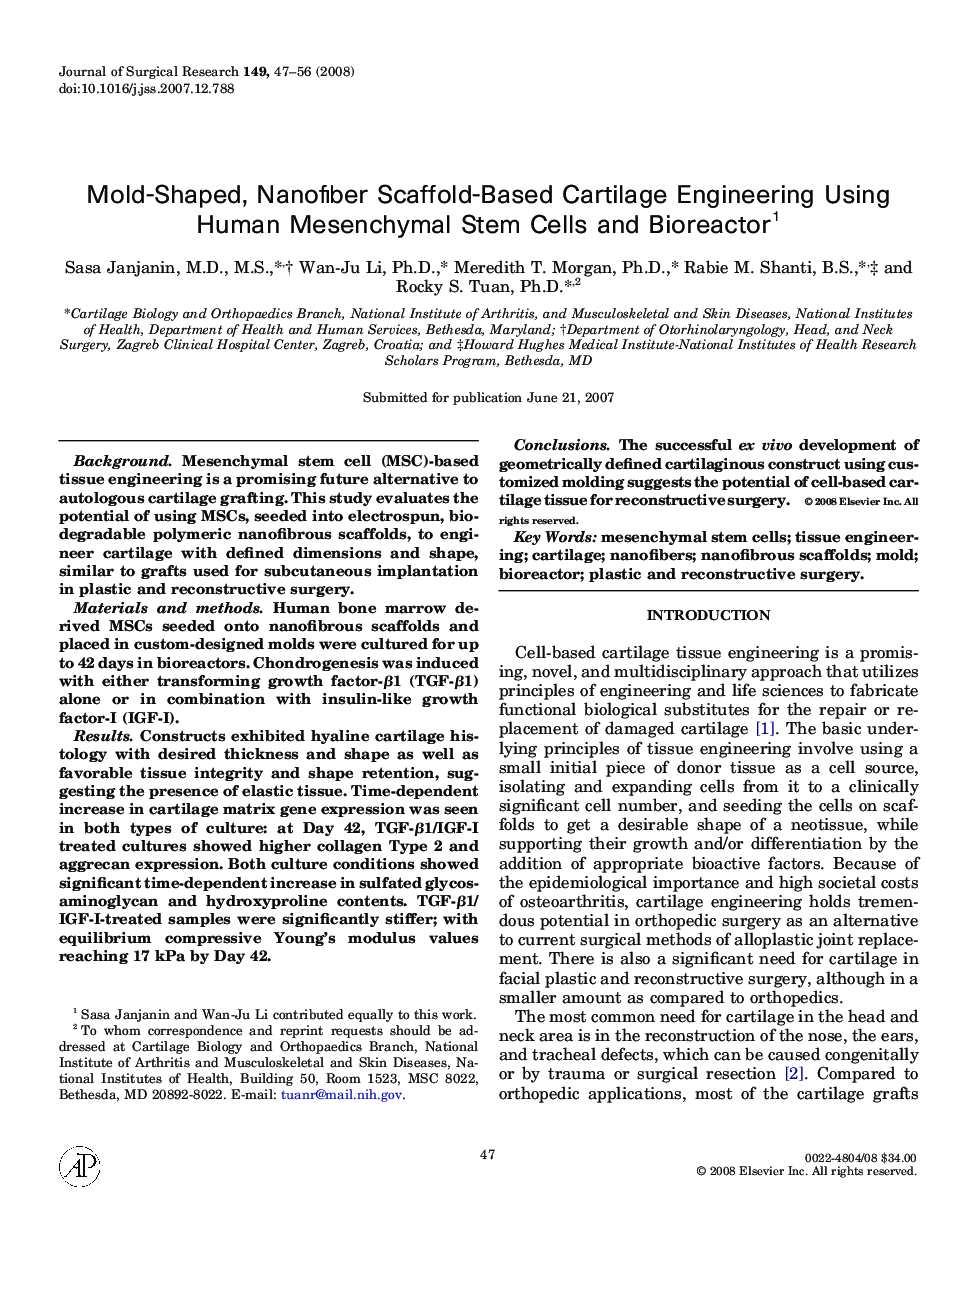 Mold-Shaped, Nanofiber Scaffold-Based Cartilage Engineering Using Human Mesenchymal Stem Cells and Bioreactor